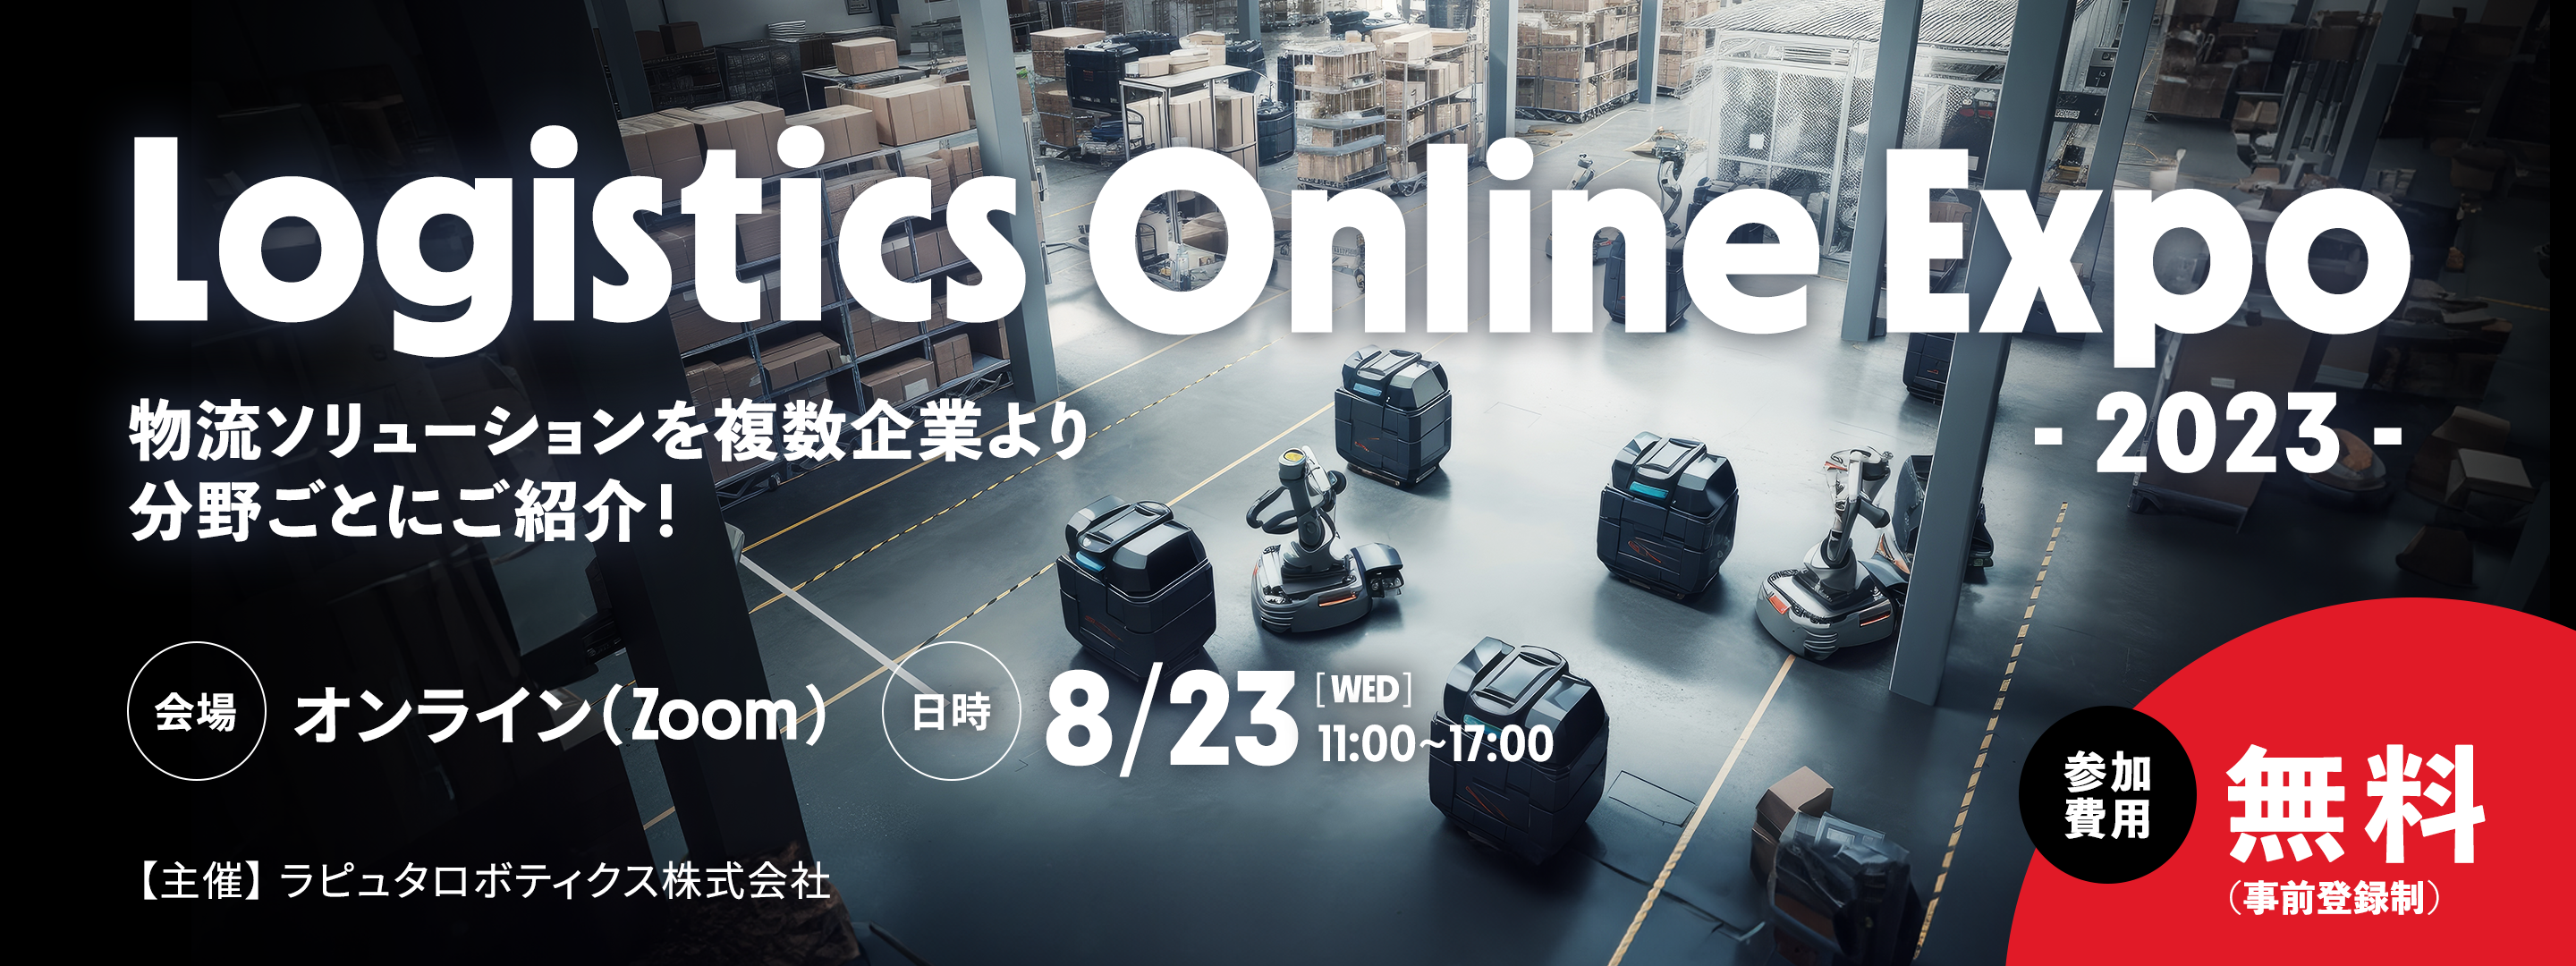 Logistics online expo 2023